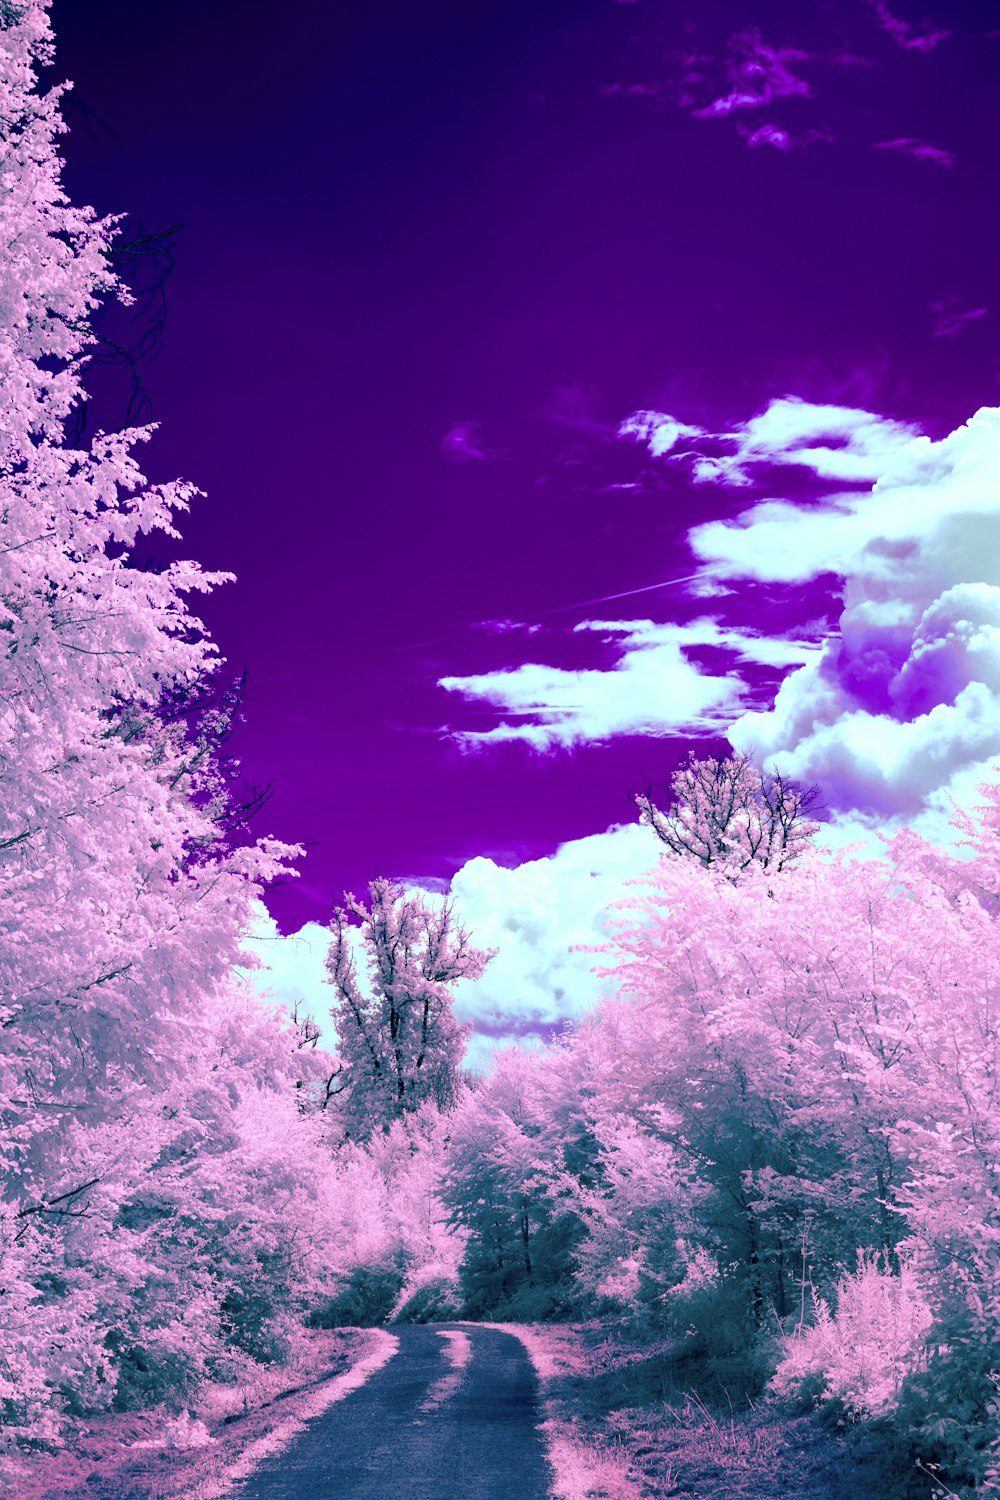 Un camino rodeado de árboles con un cielo púrpura al fondo